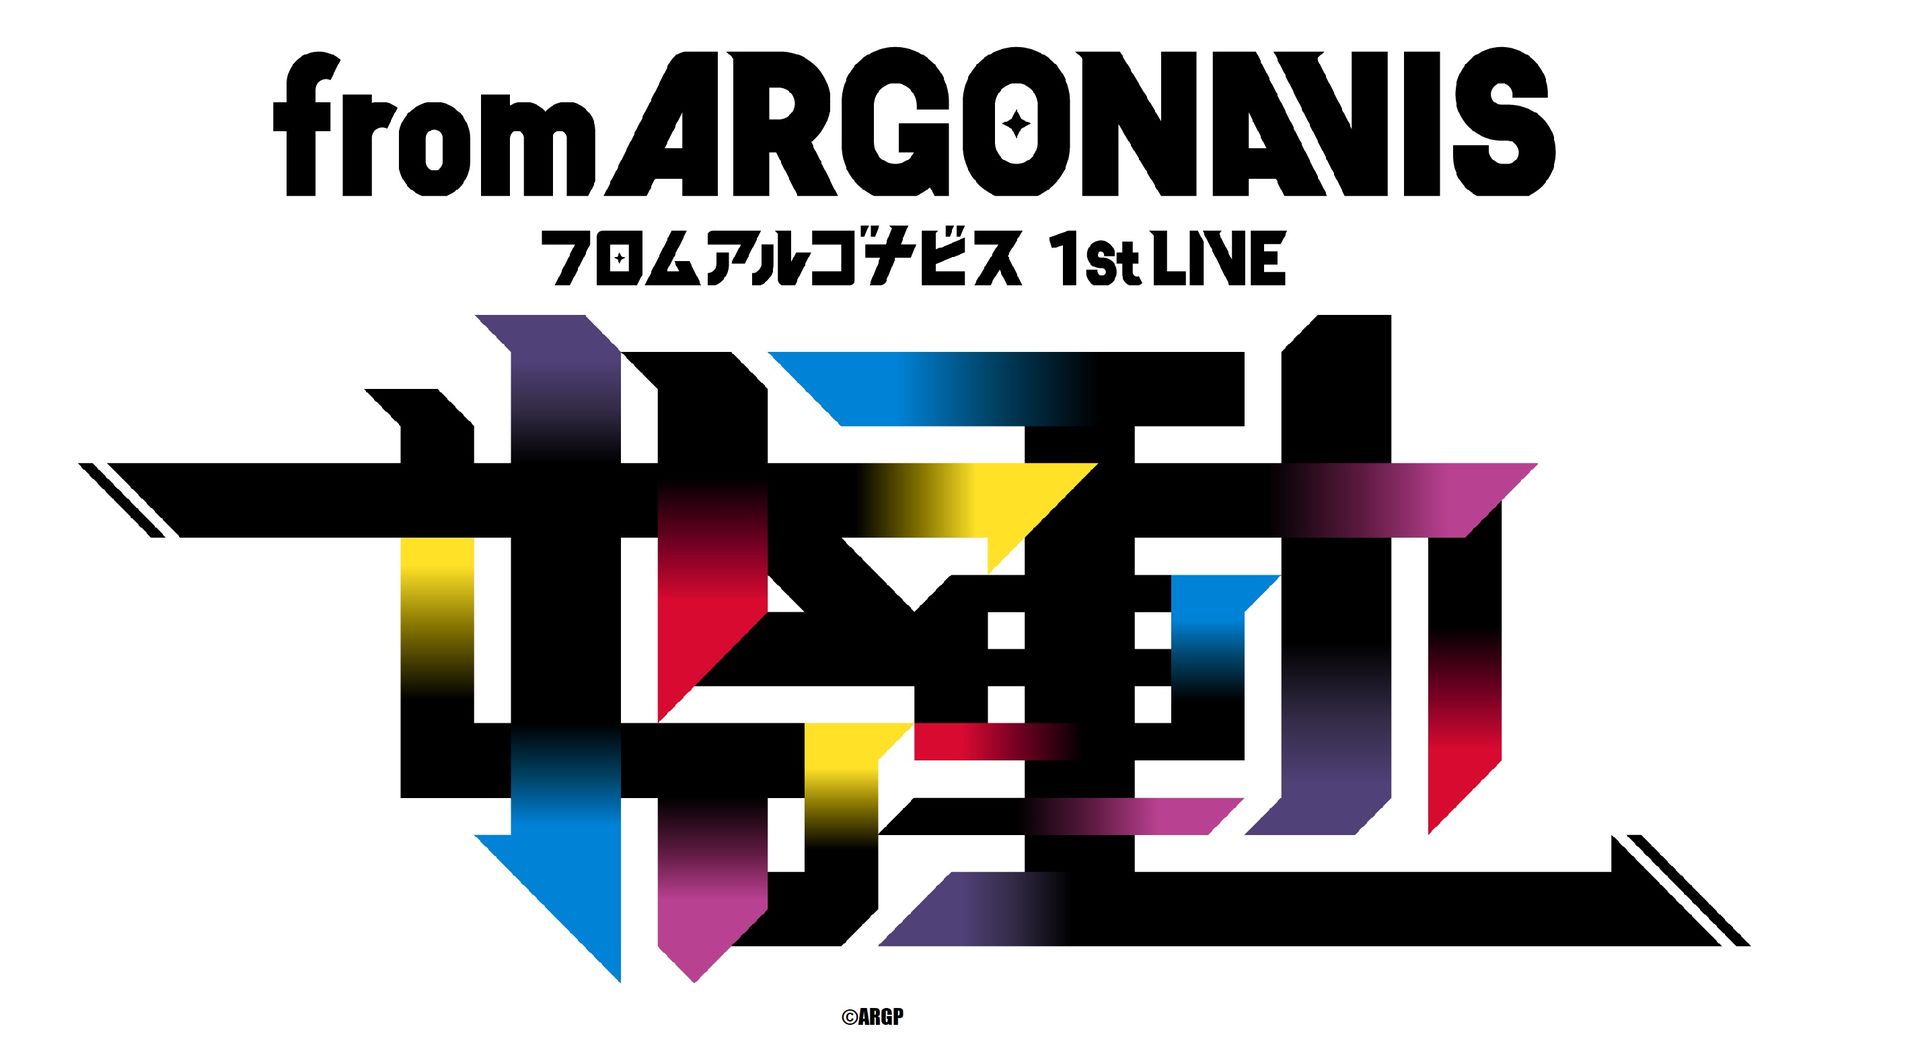 [Streaming+] from ARGONAVIS 1st LIVEー始动ー